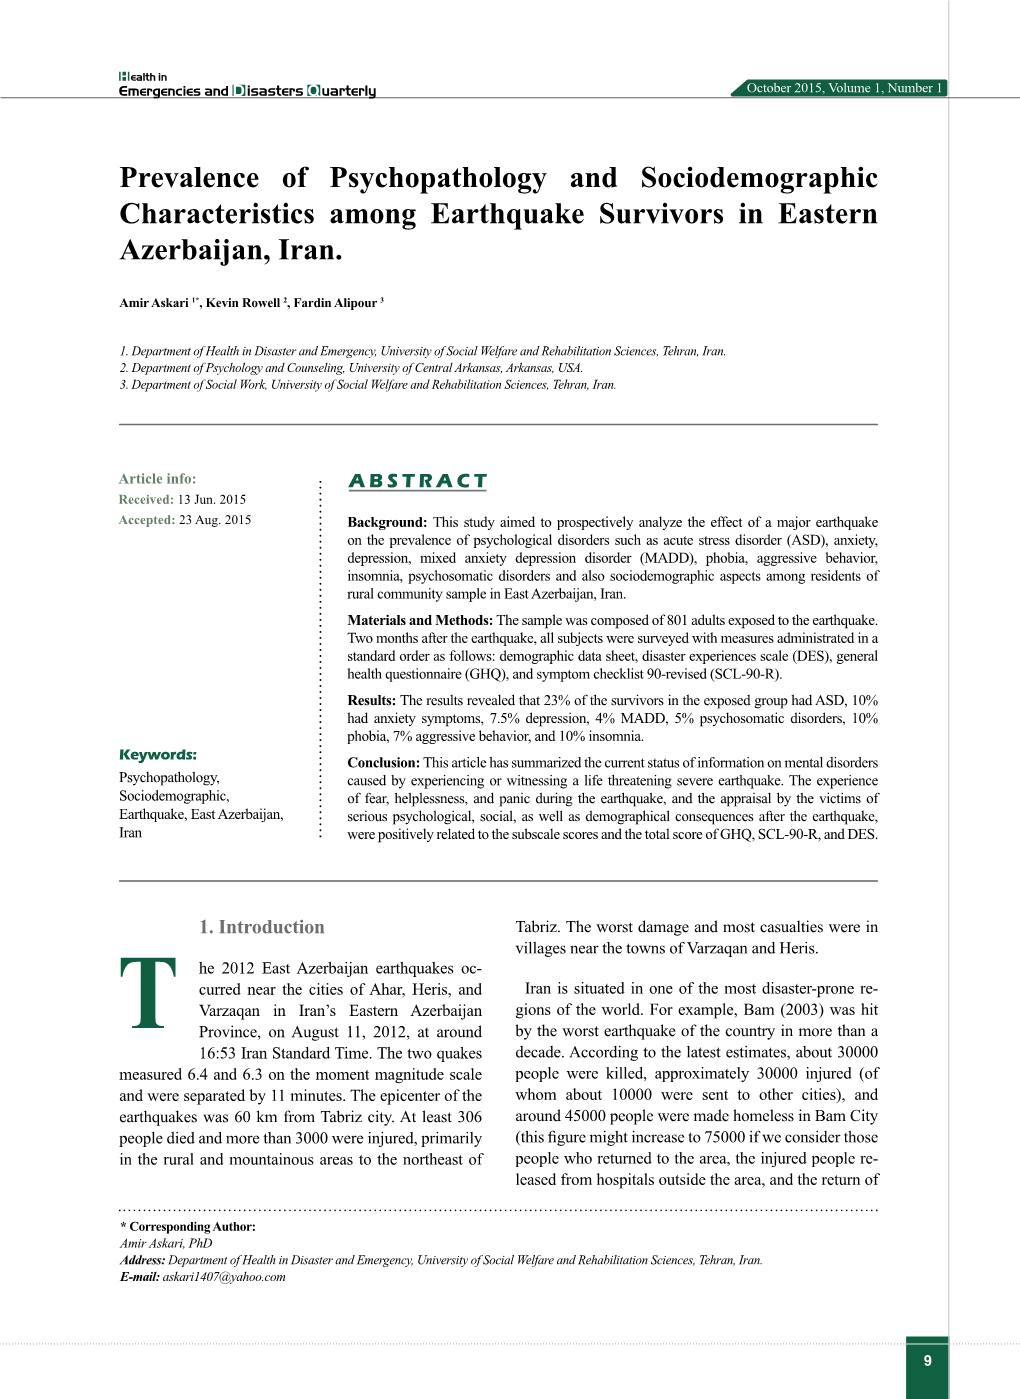 Prevalence of Psychopathology and Sociodemographic Characteristics Among Earthquake Survivors in Eastern Azerbaijan, Iran